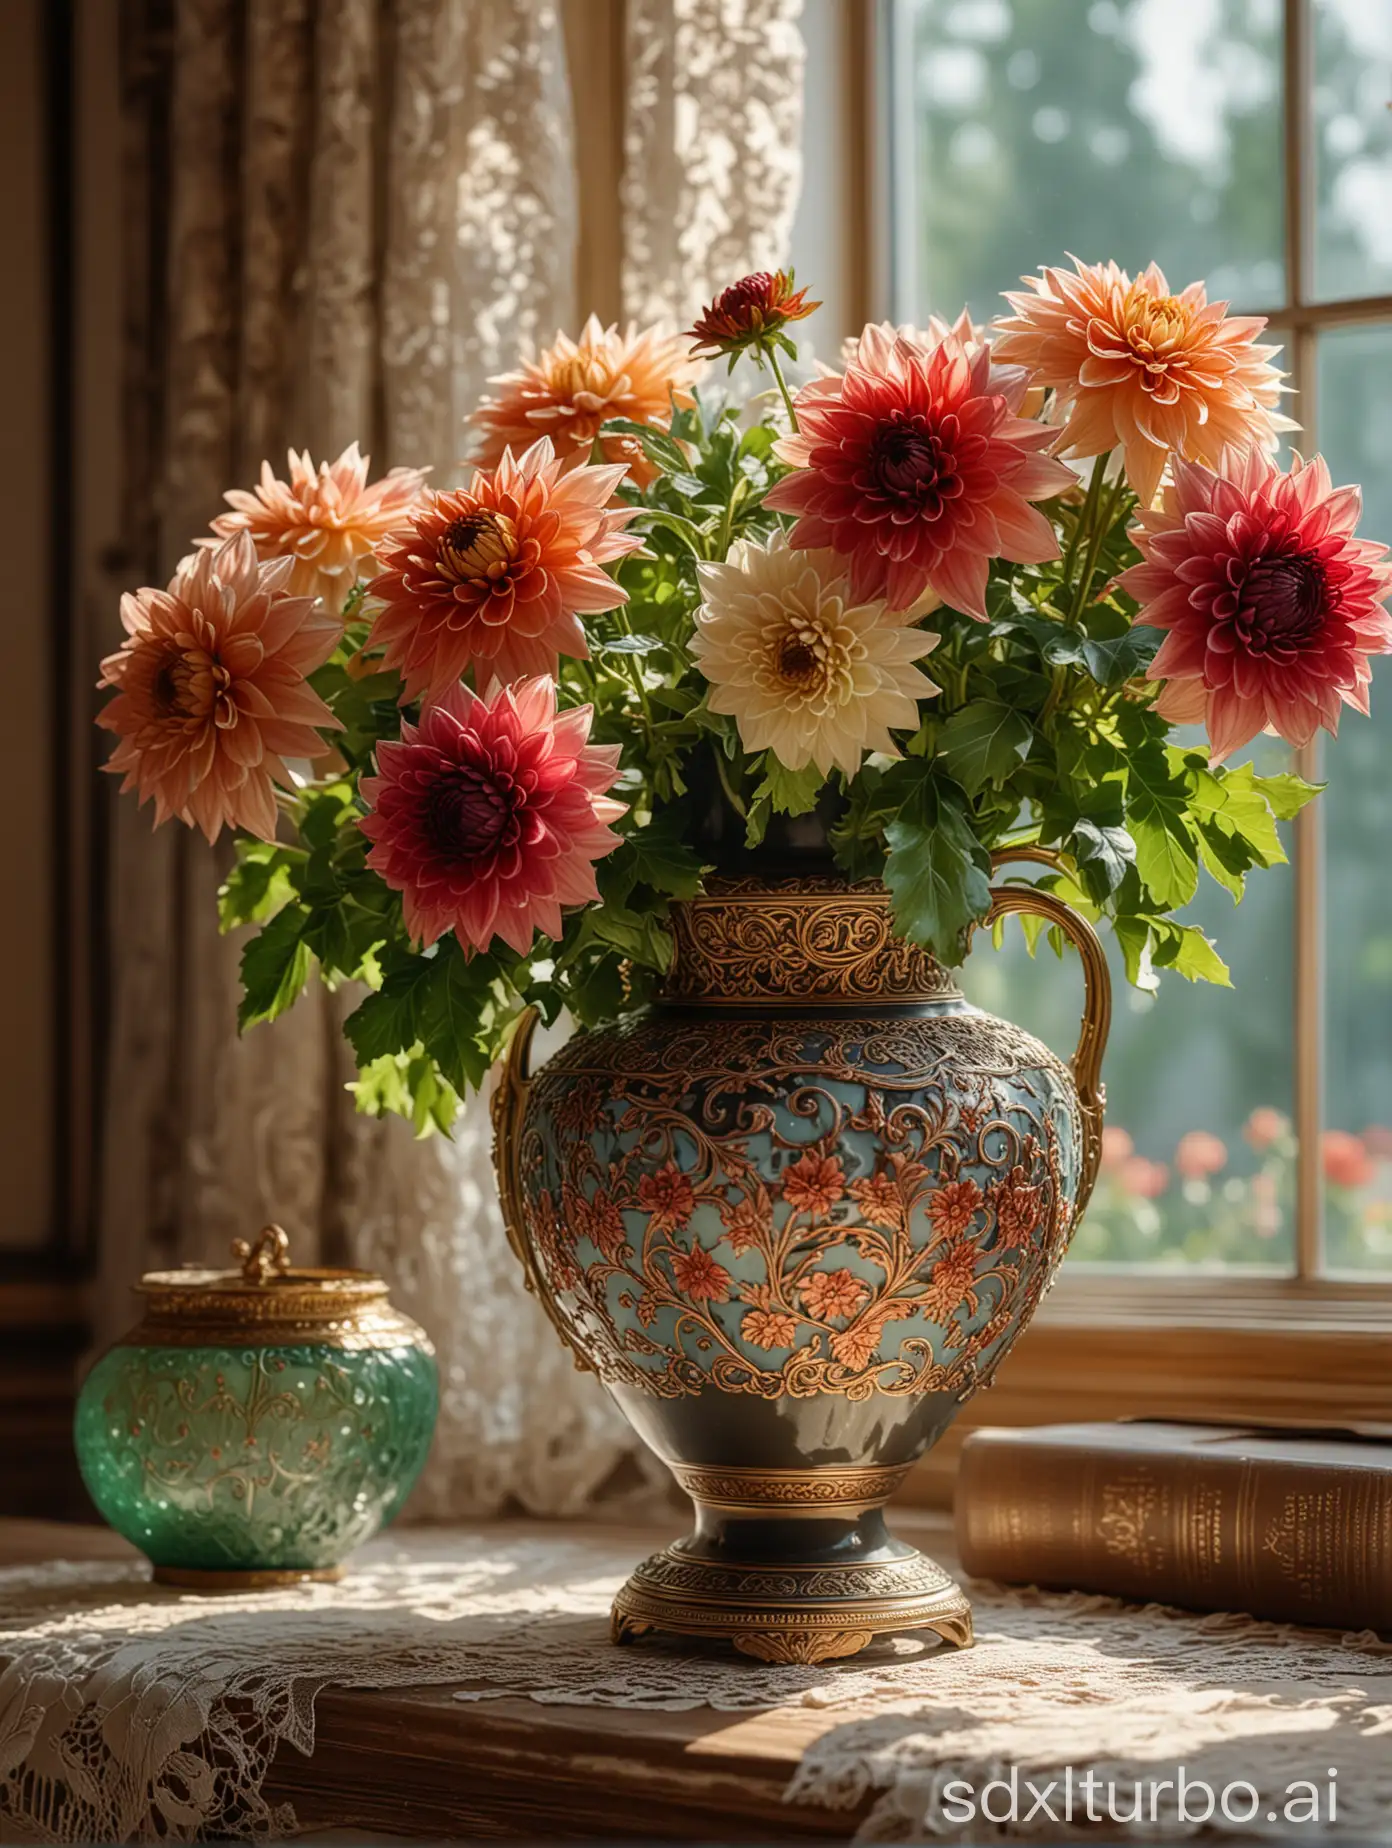 Luxury-Porcelain-Vase-with-Colorful-Dahlias-and-Vintage-Decor